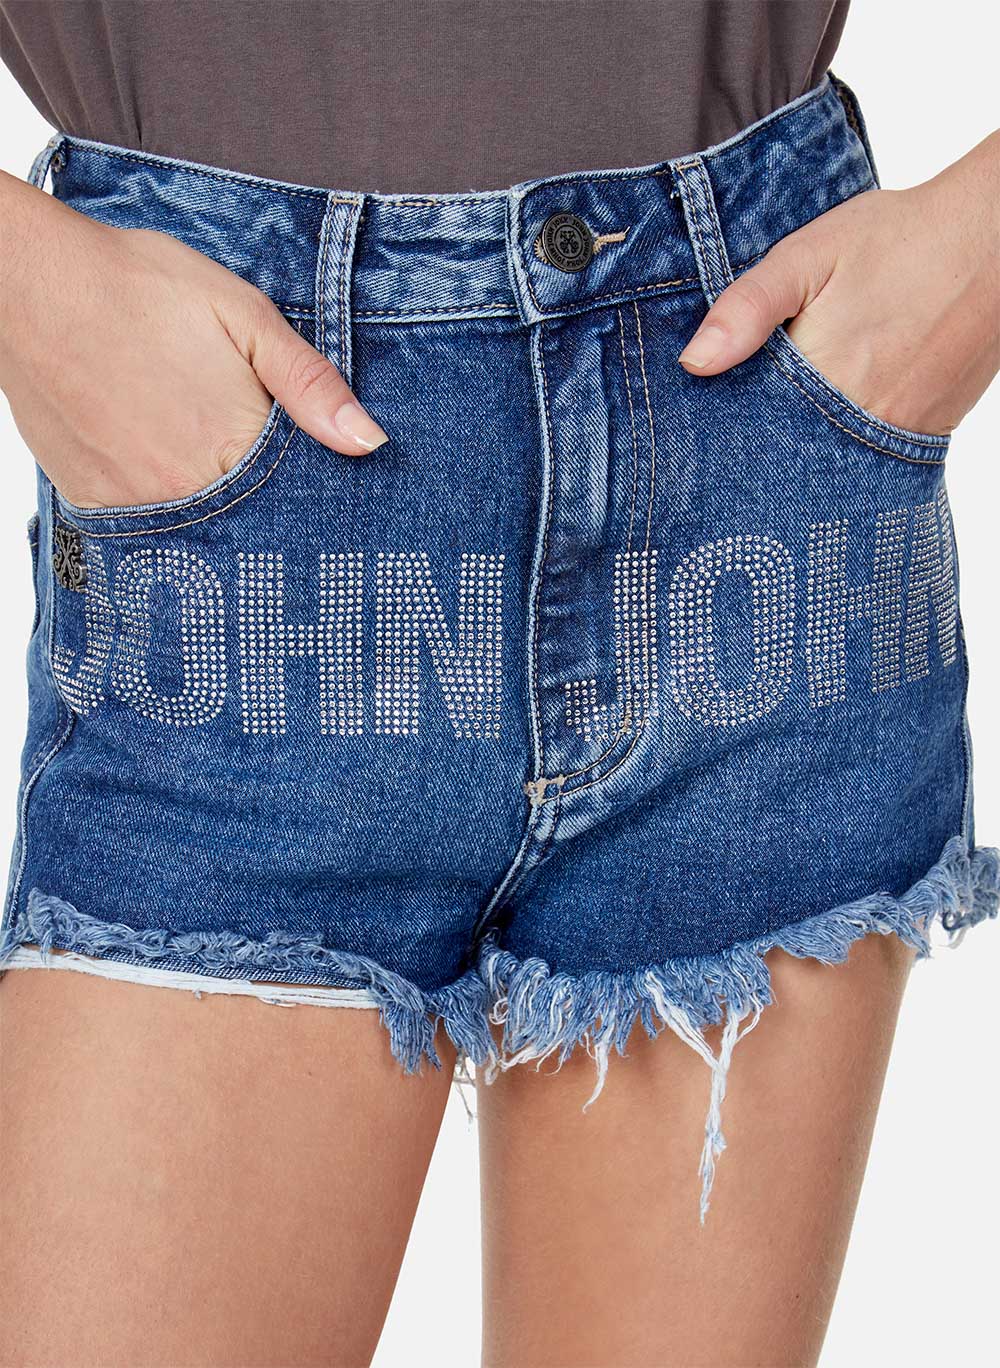 Shorts Jeans Boy Alto Phelps John John Feminino - John John